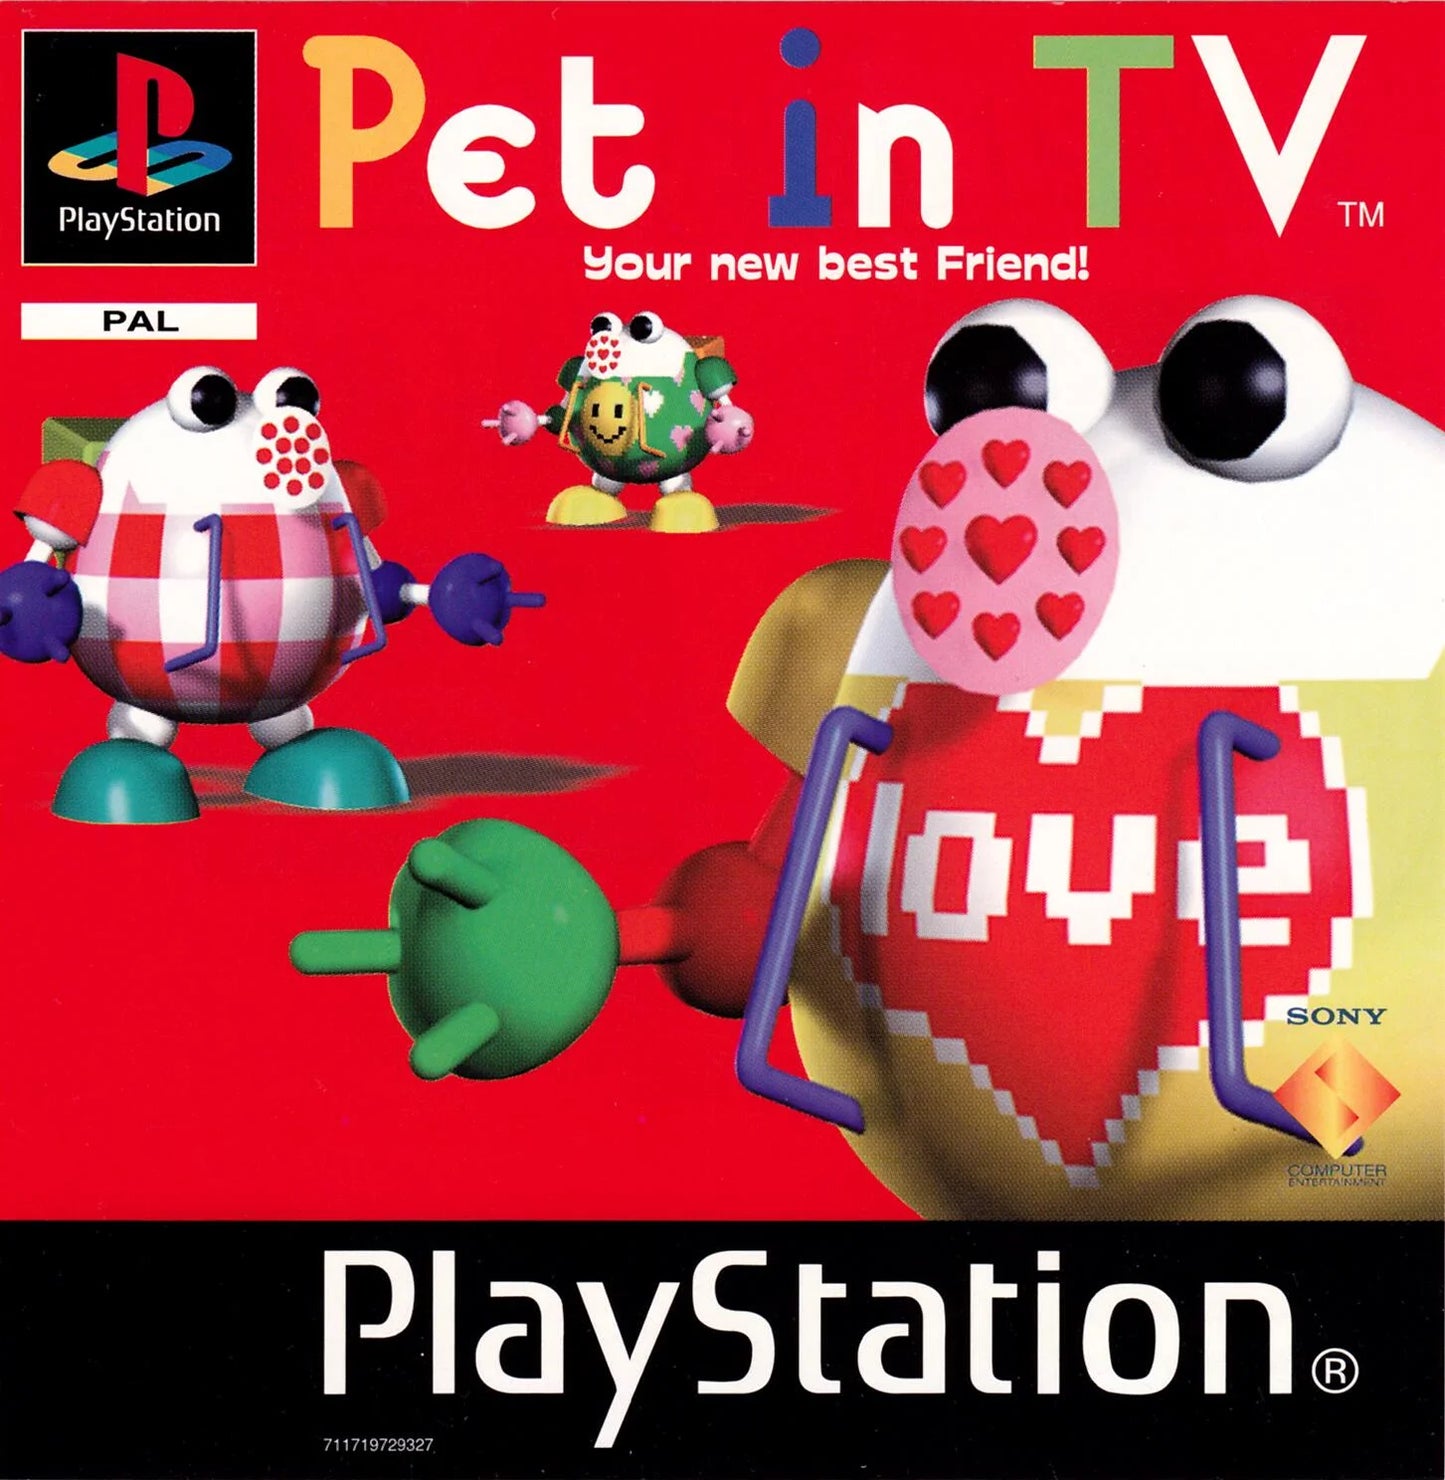 Playstation: Pet in TV